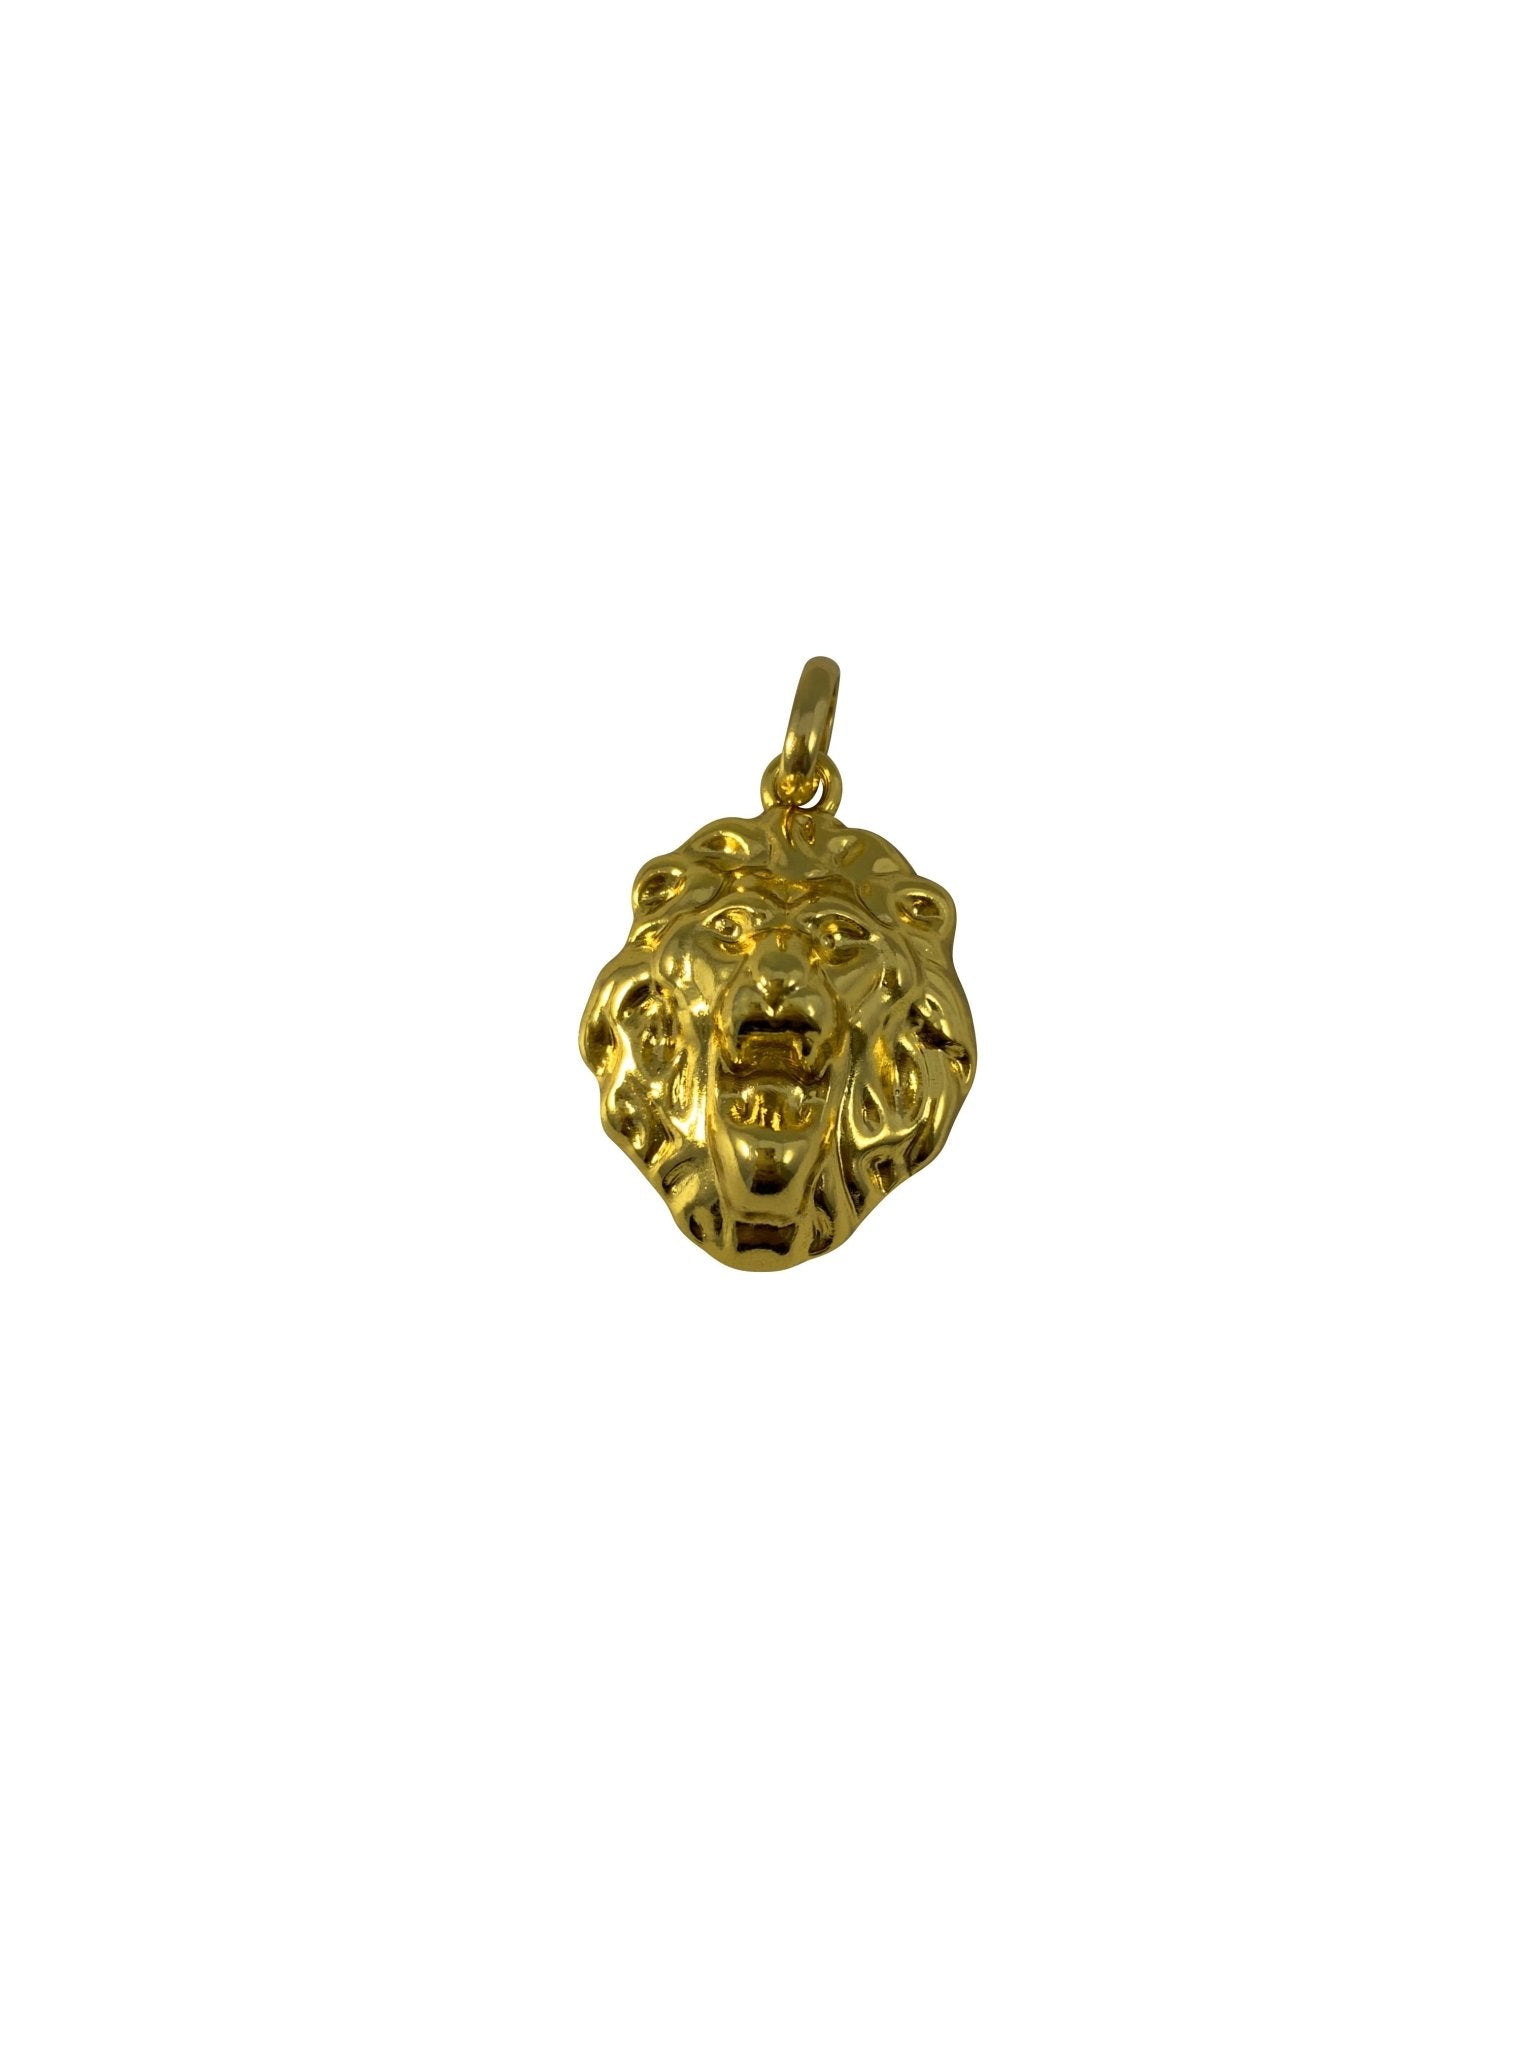 Lion Medallion